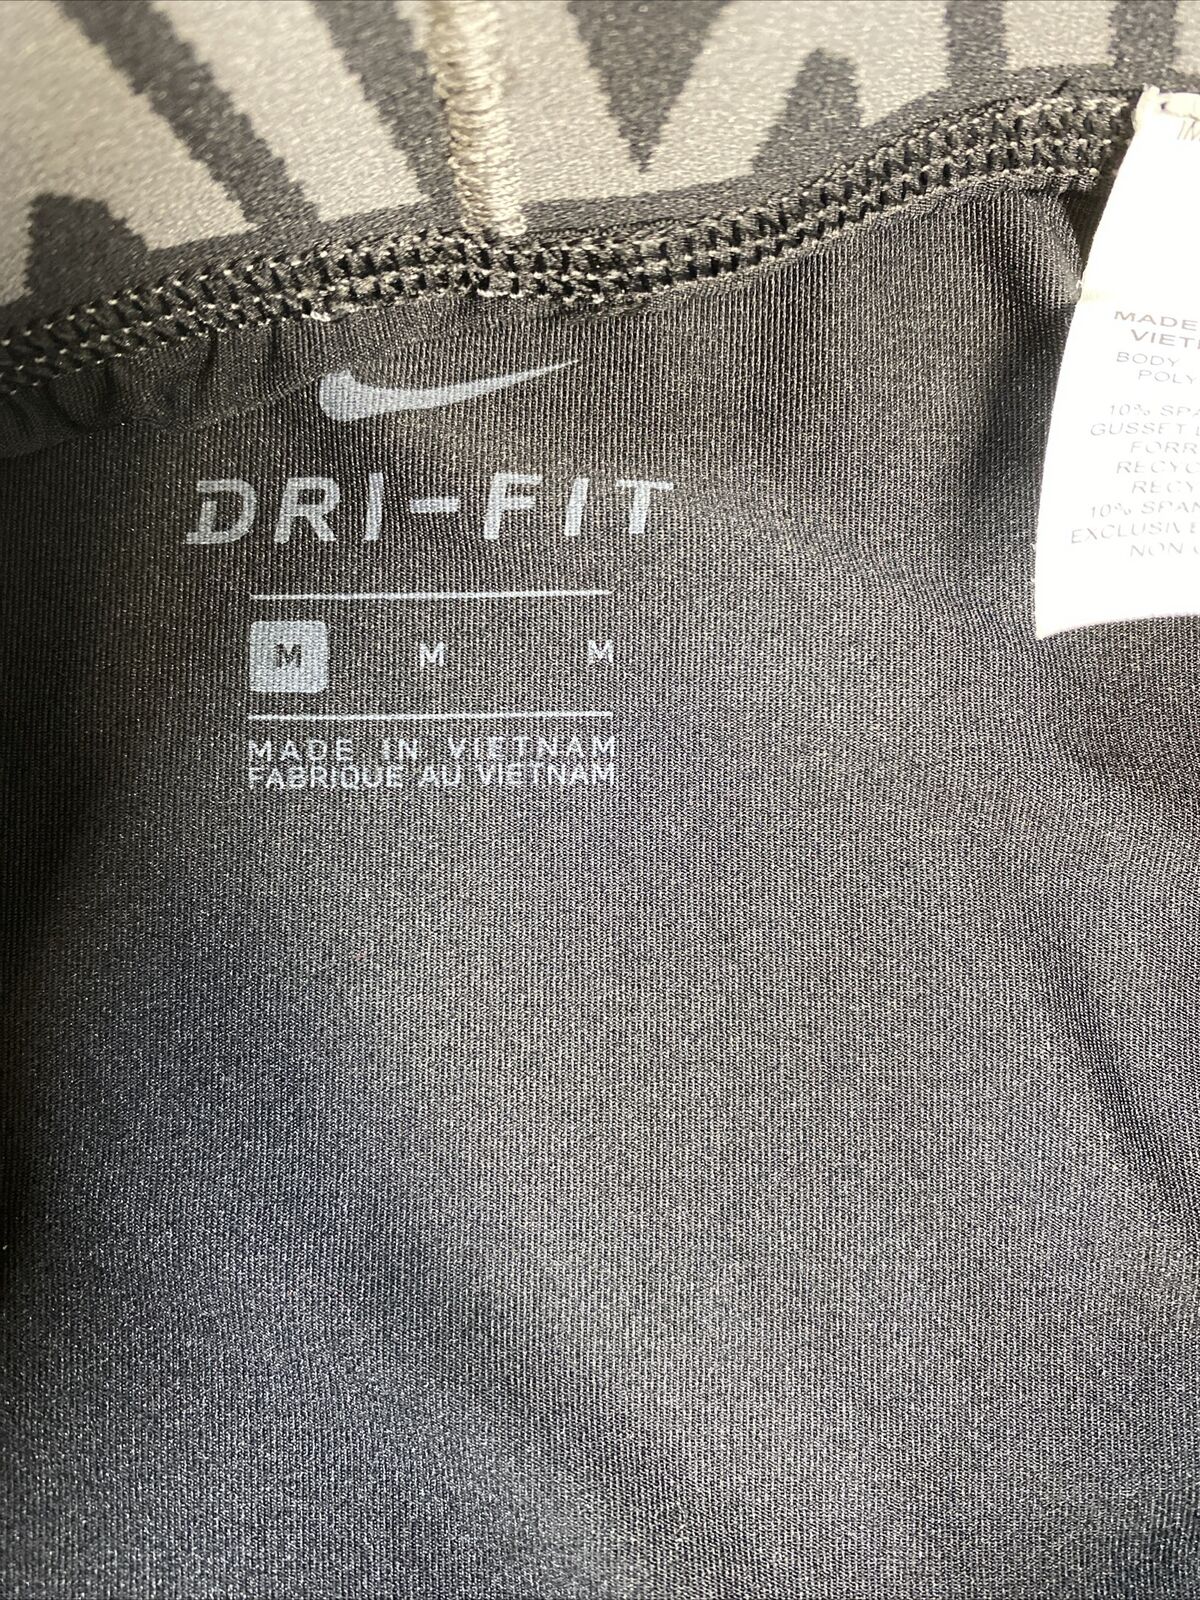 Nike Men's Black Dri-Fit Compression Layer Training Pants - M